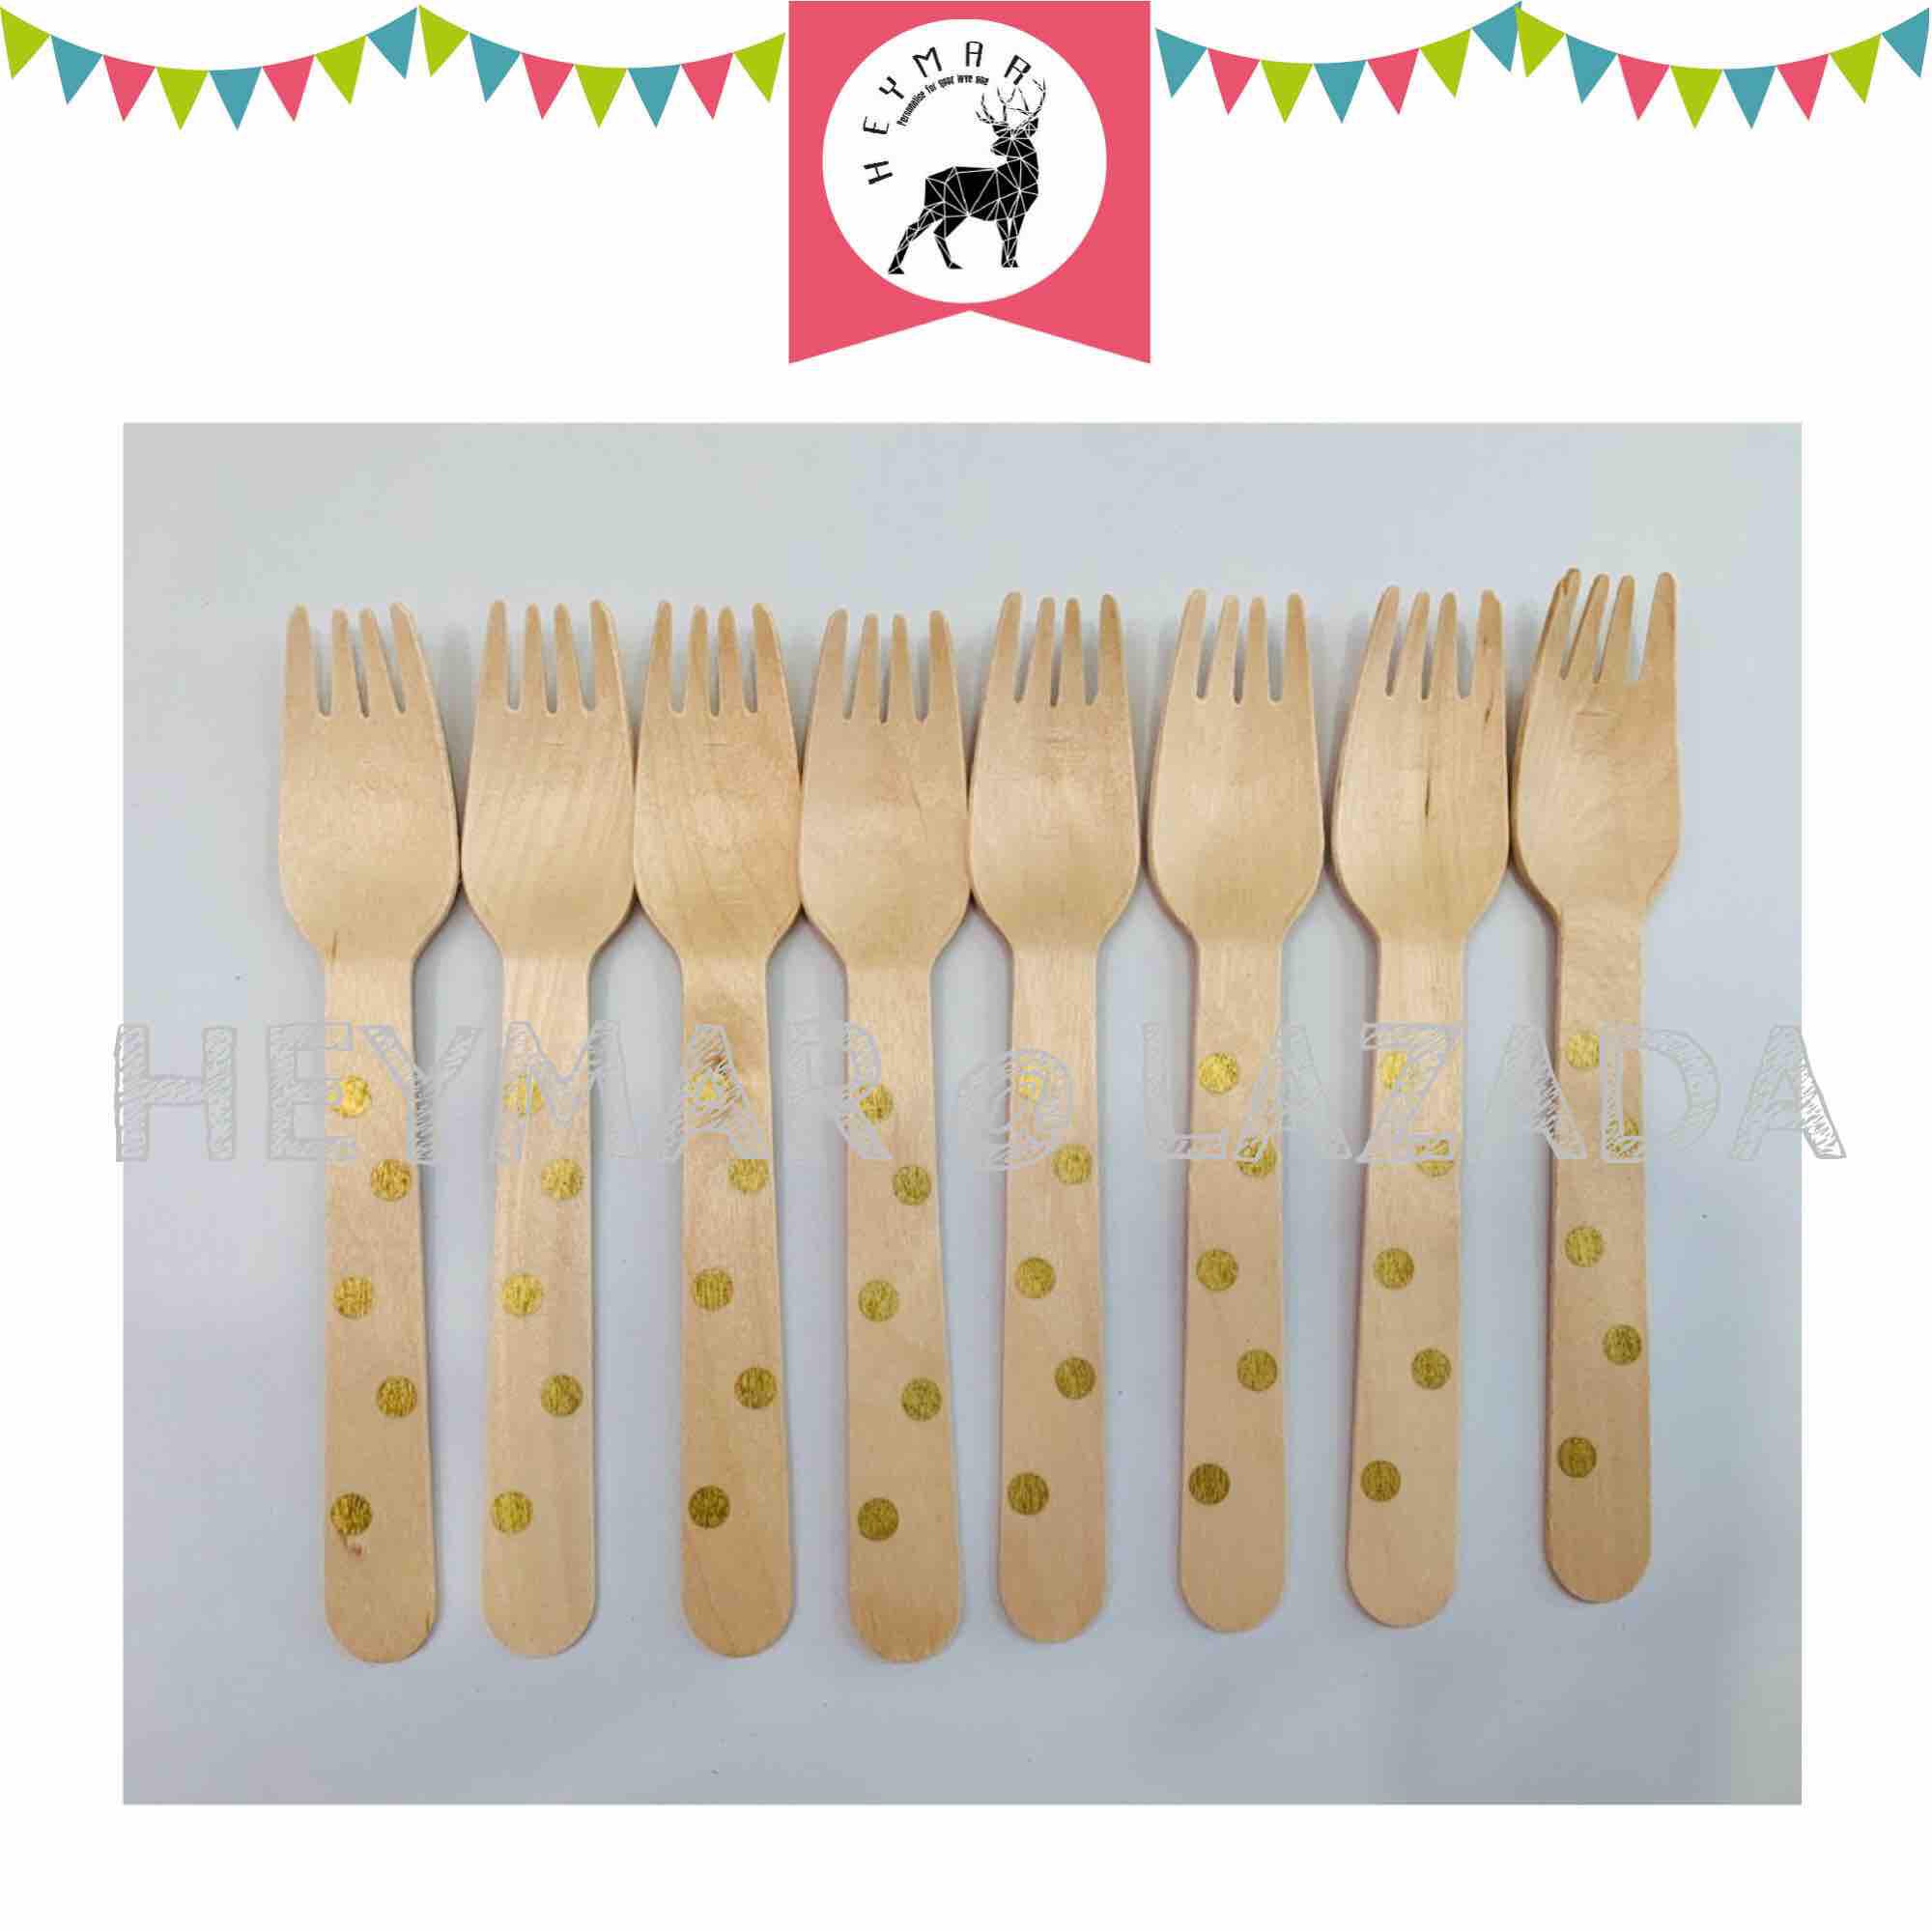 PARTY BOX  ช้อมส้อมมีดไม้_Heymar spoon fork knife wooden party cutlery